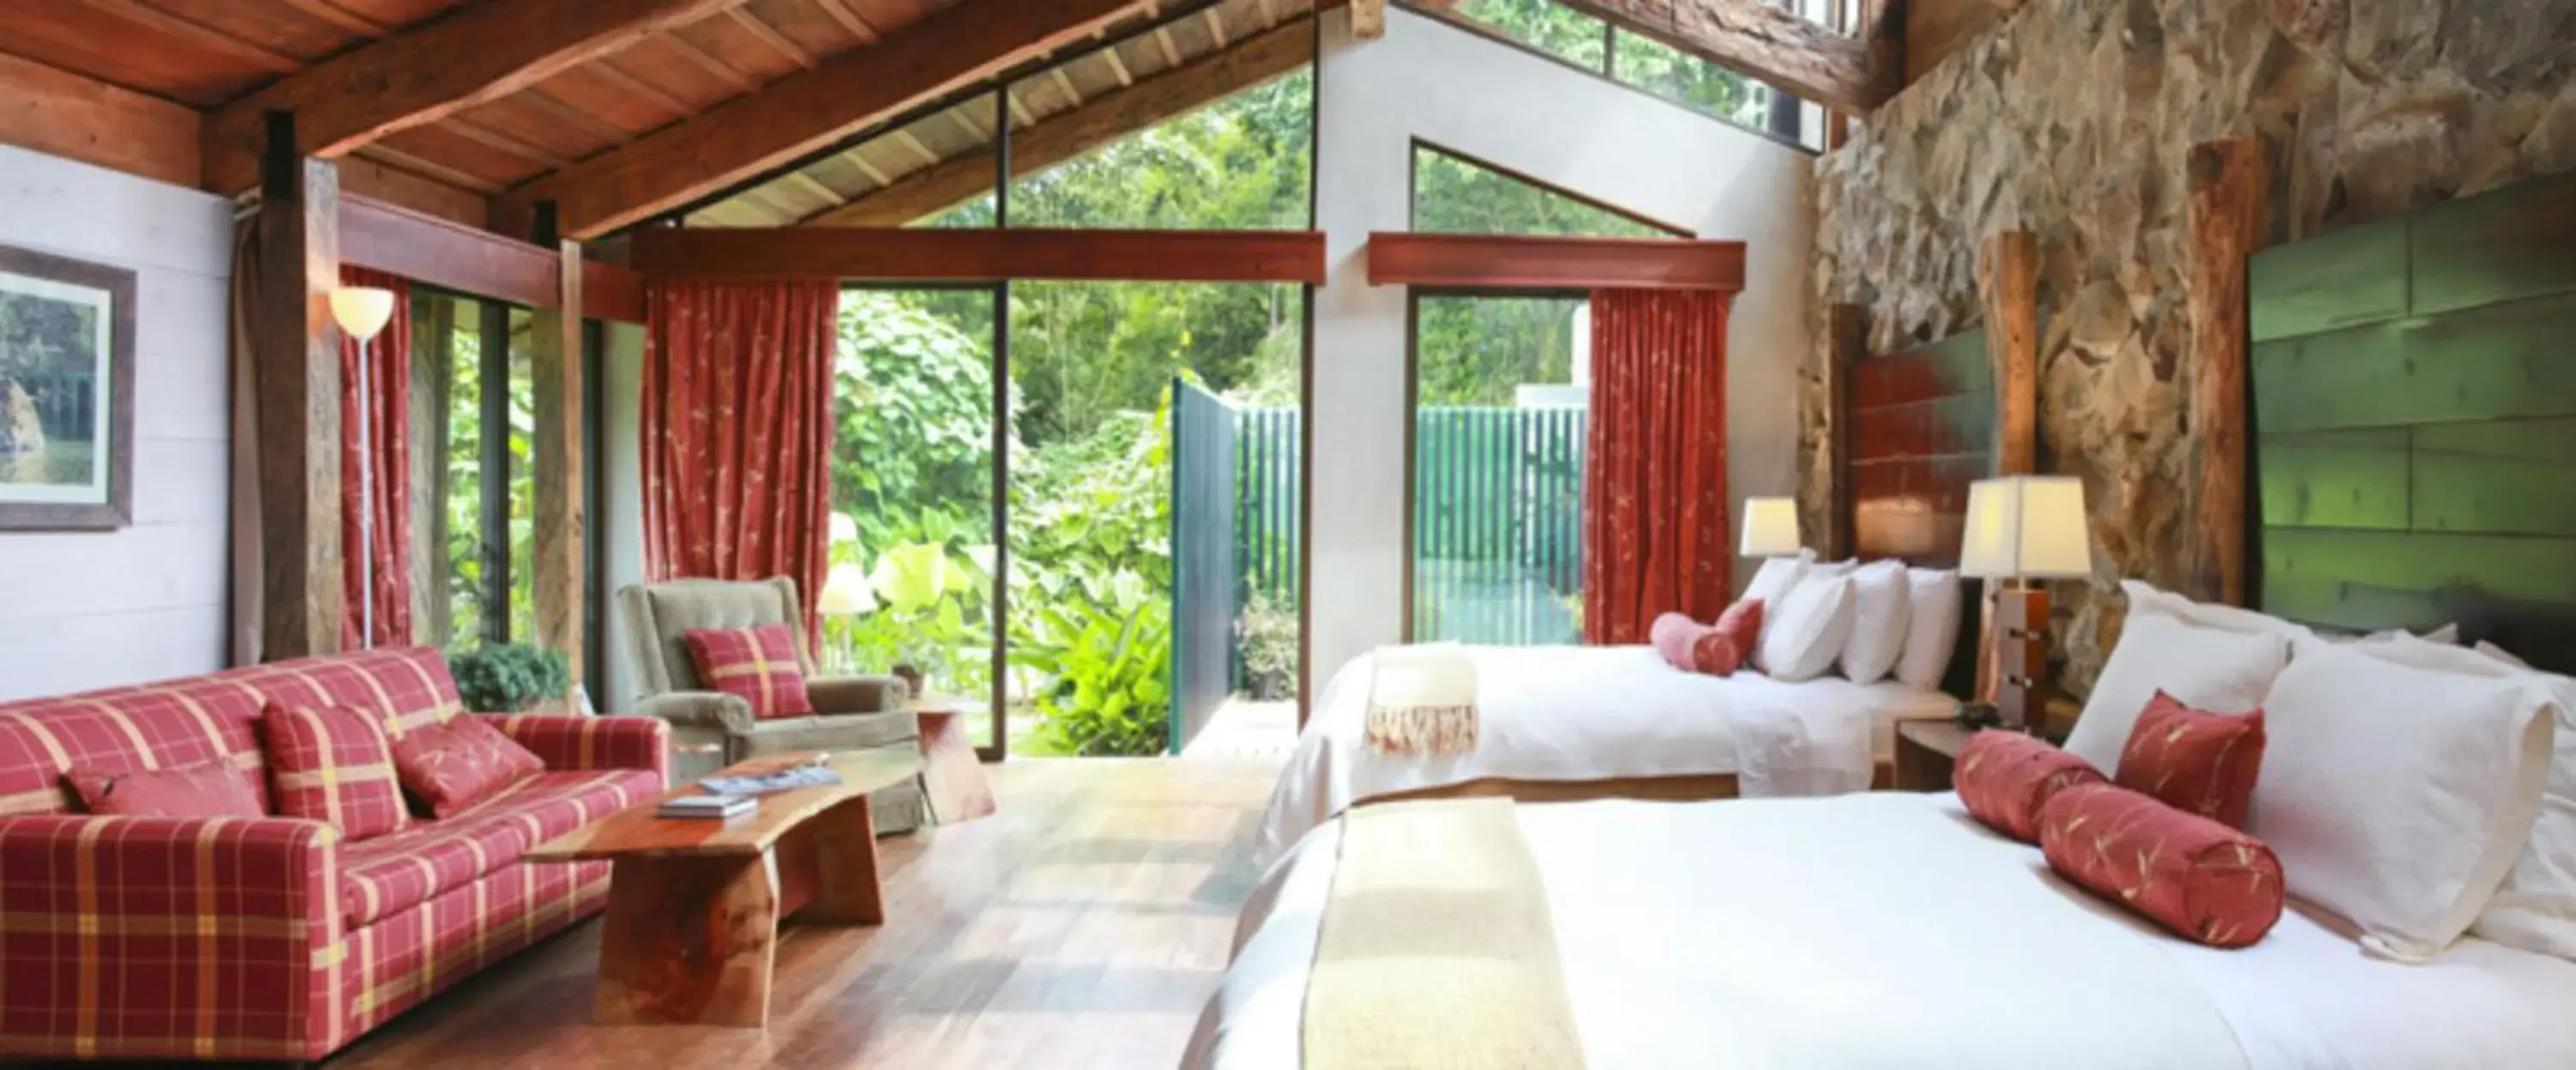 Bedroom in Poas Volcano Lodge